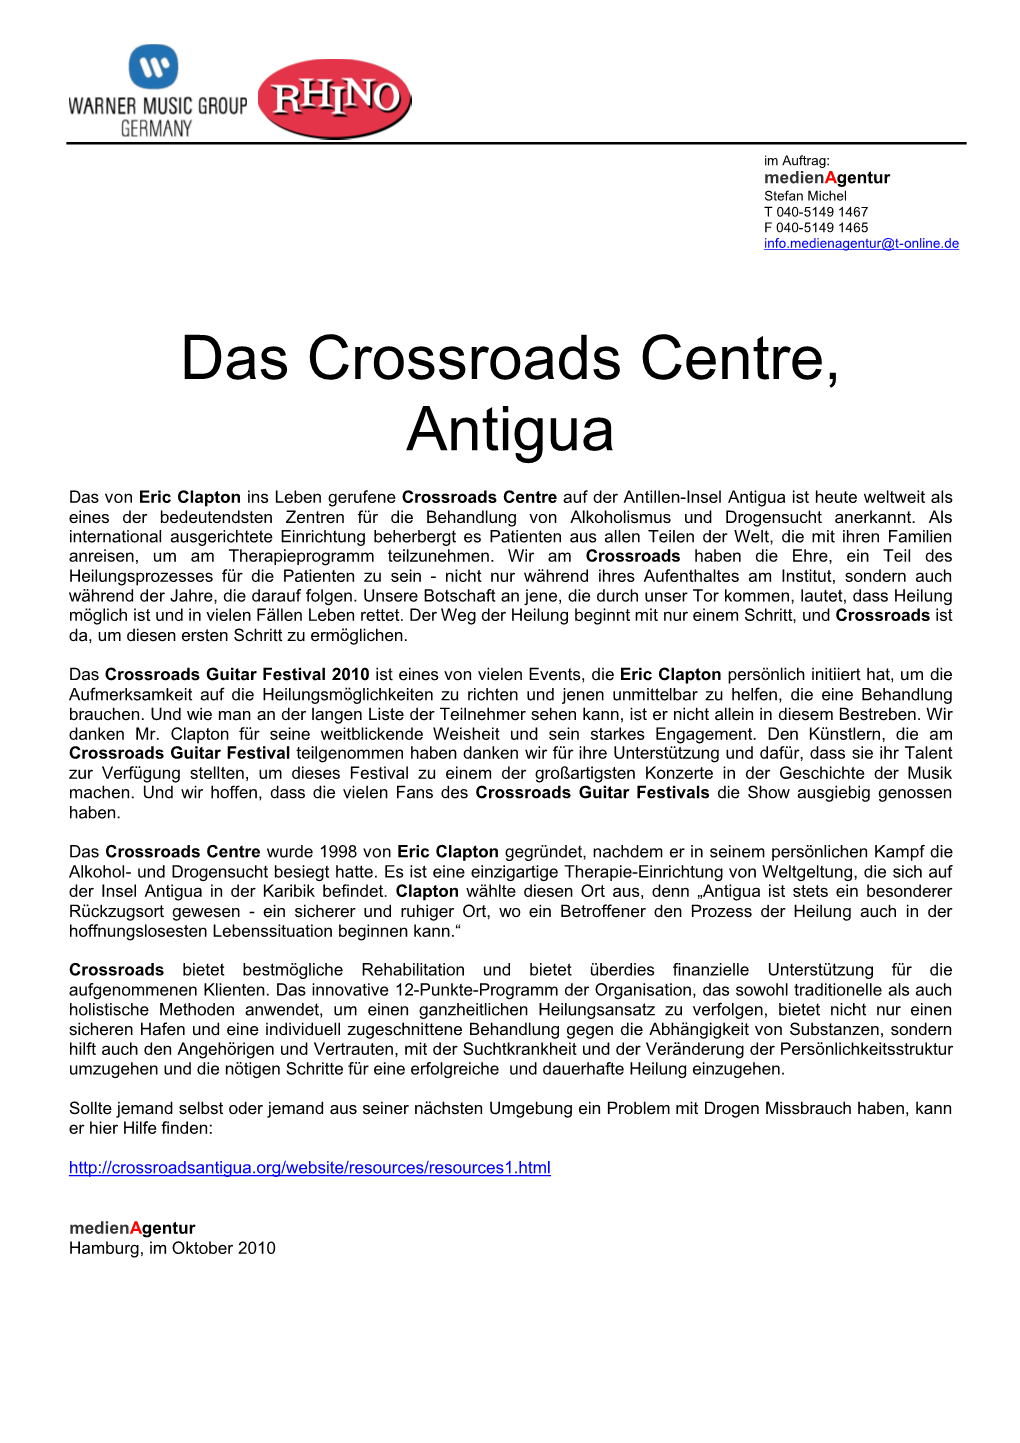 Das Crossroads Centre, Antigua